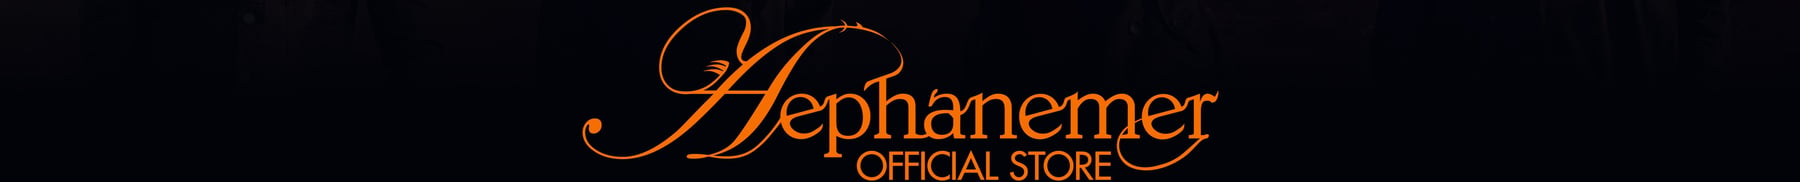 Official Aephanemer Store - Merchandising - T-shirts - Digipak - Vinyls